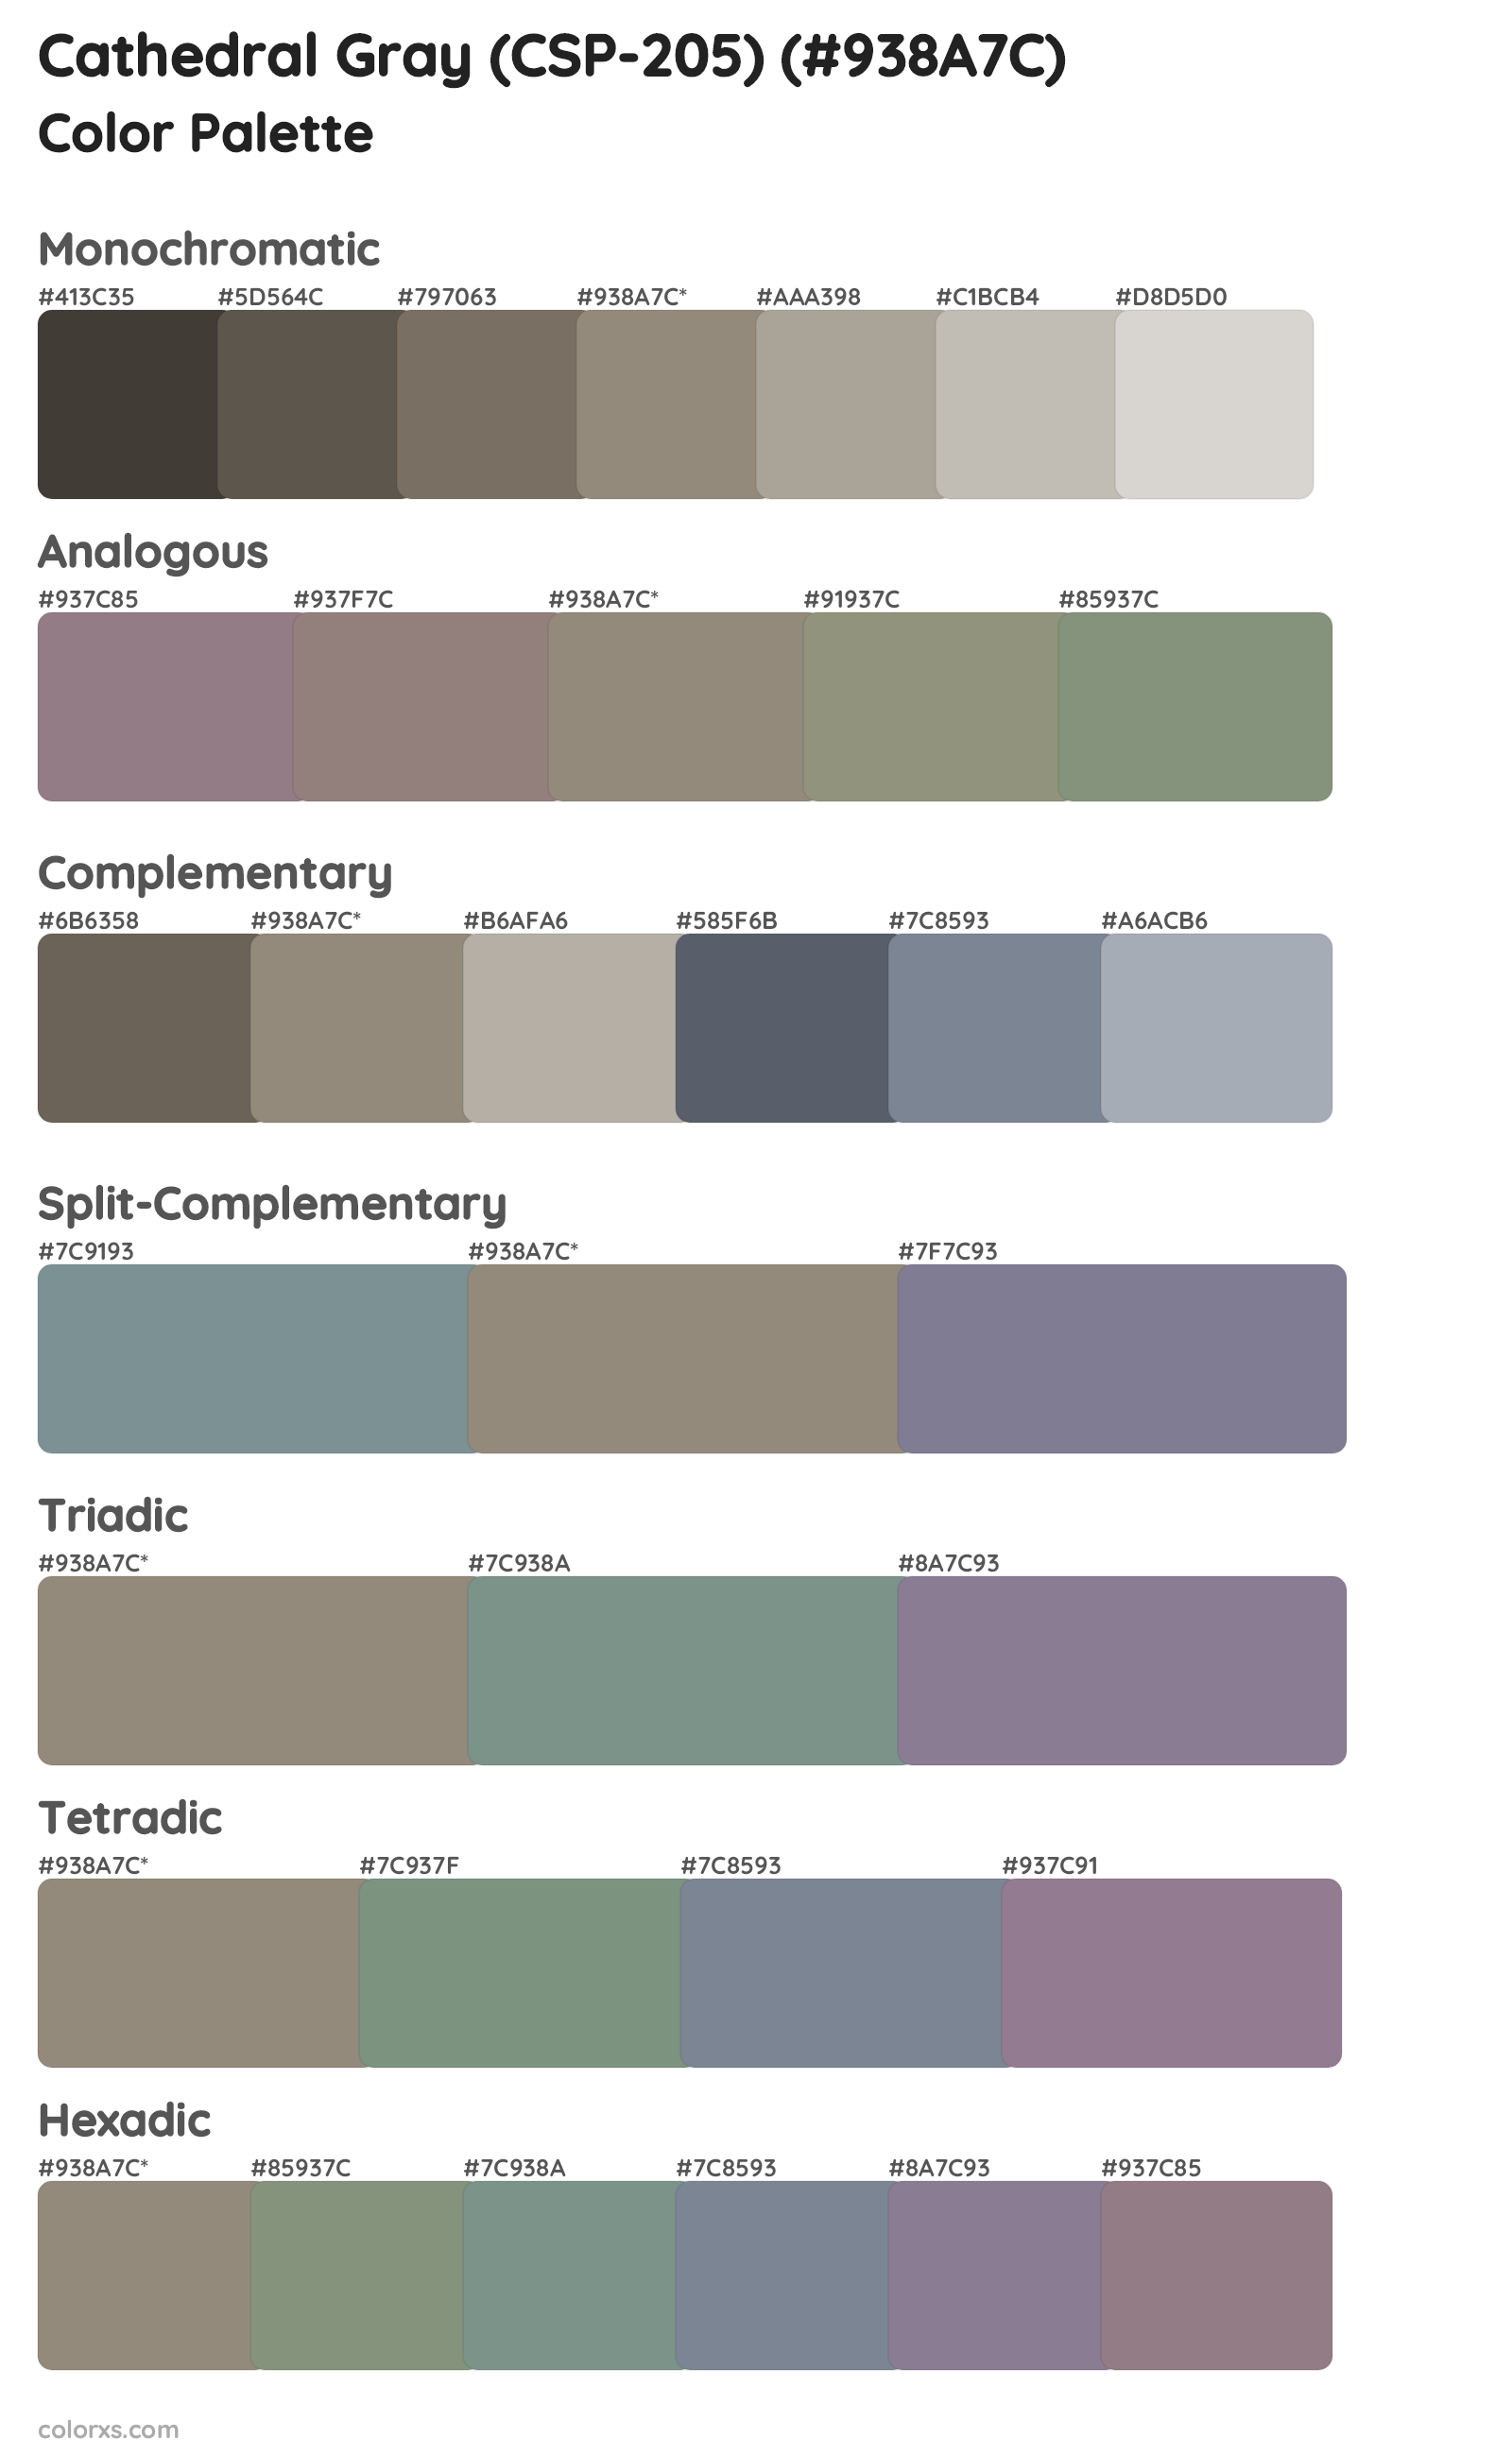 Cathedral Gray (CSP-205) Color Scheme Palettes